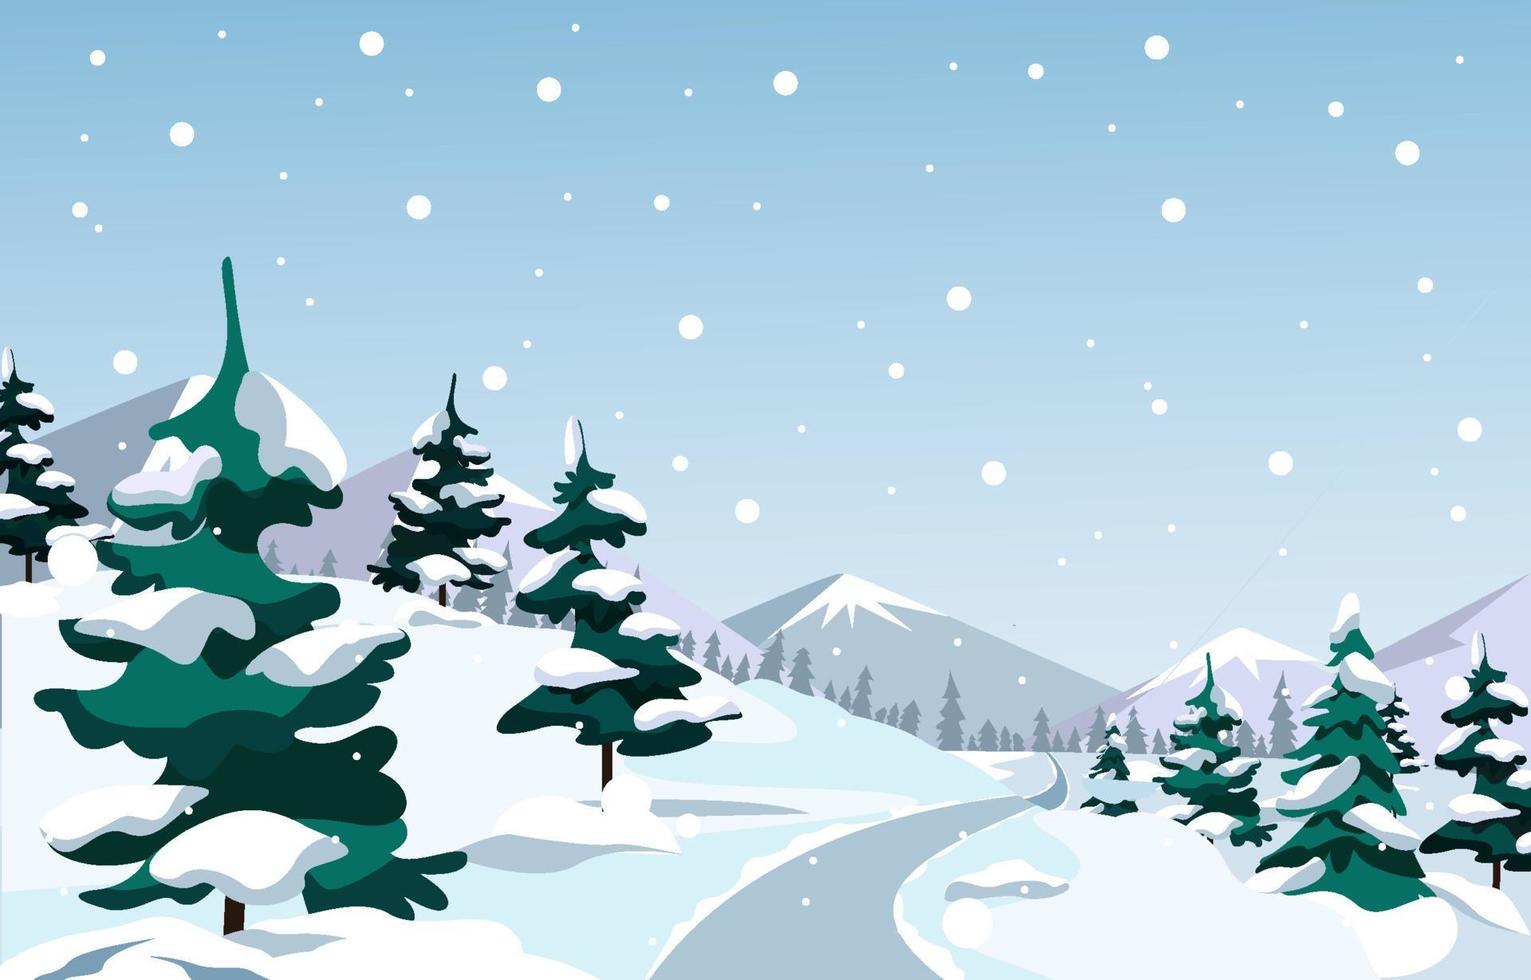 Winter Nature Scenery vector